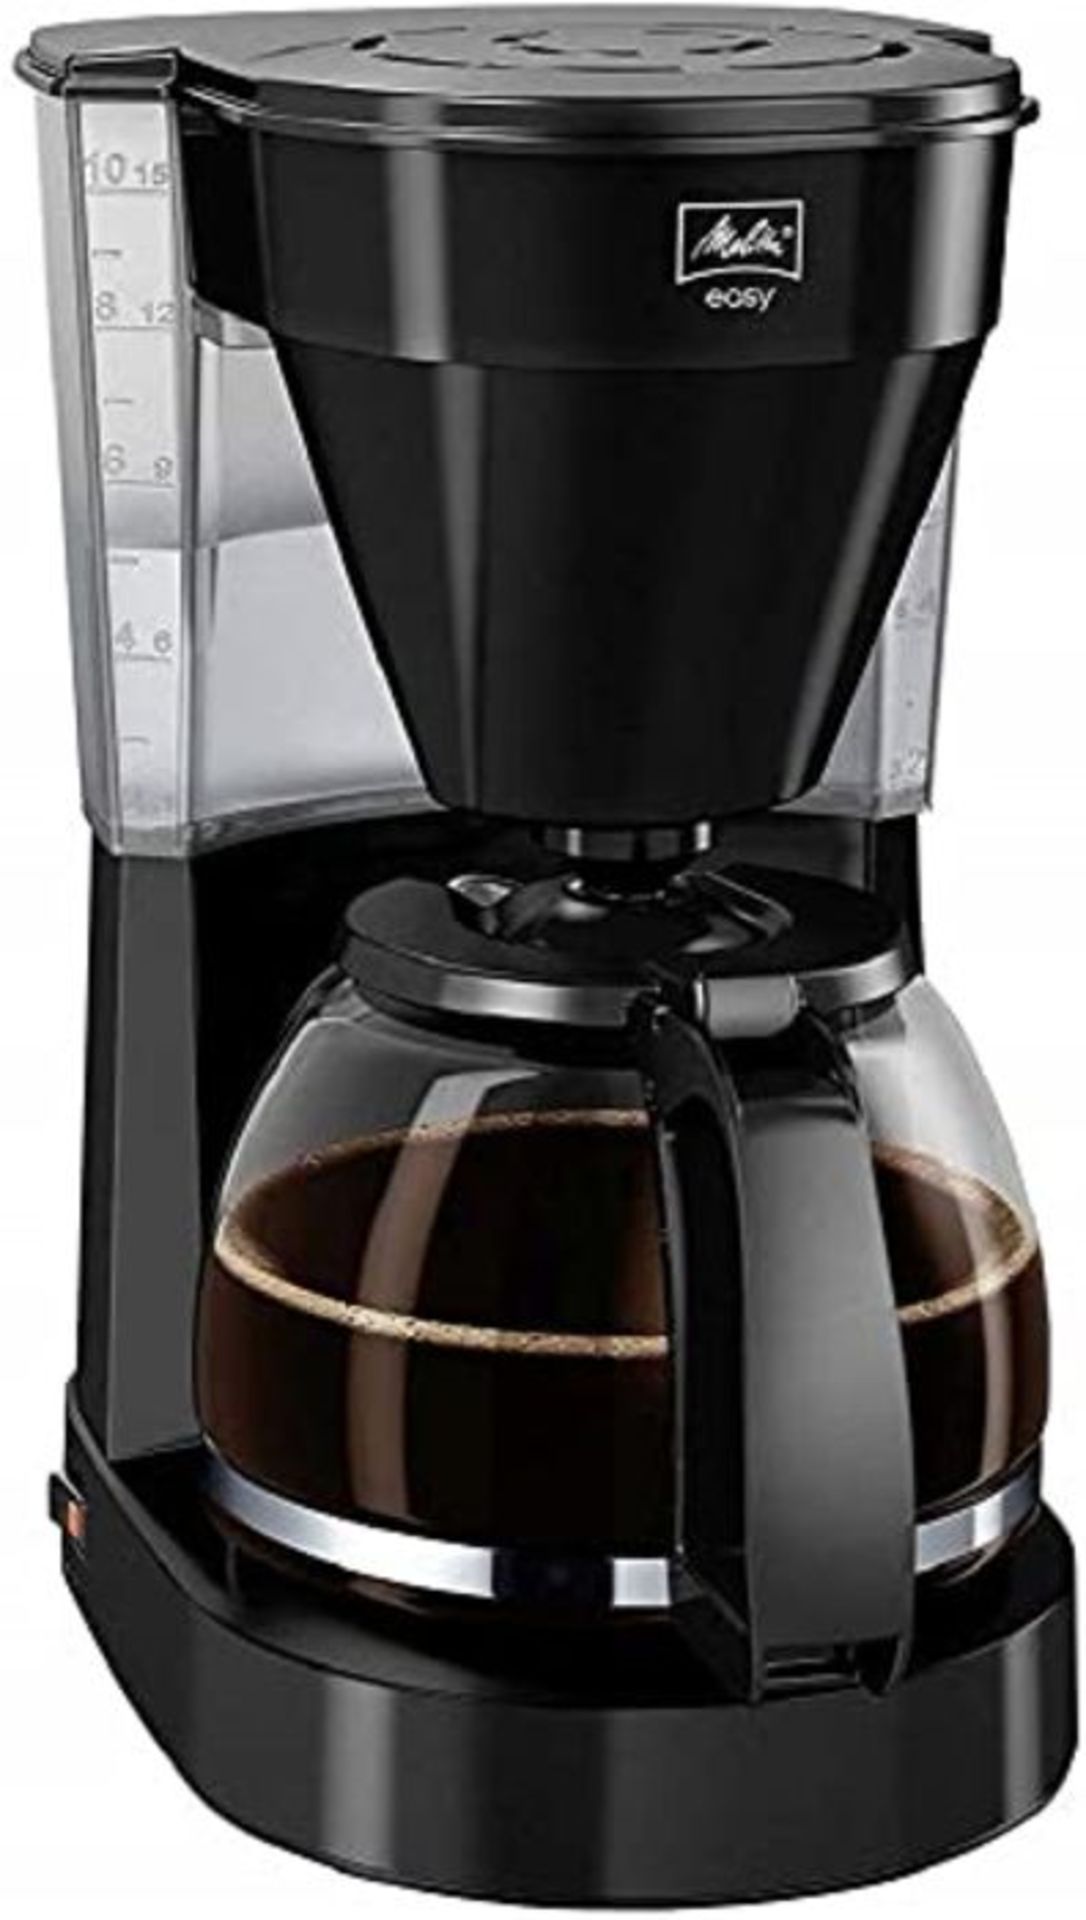 Melitta Filter Coffee Machine with Glass Jug, Easy II Model, 1023-02, Black, 6762887